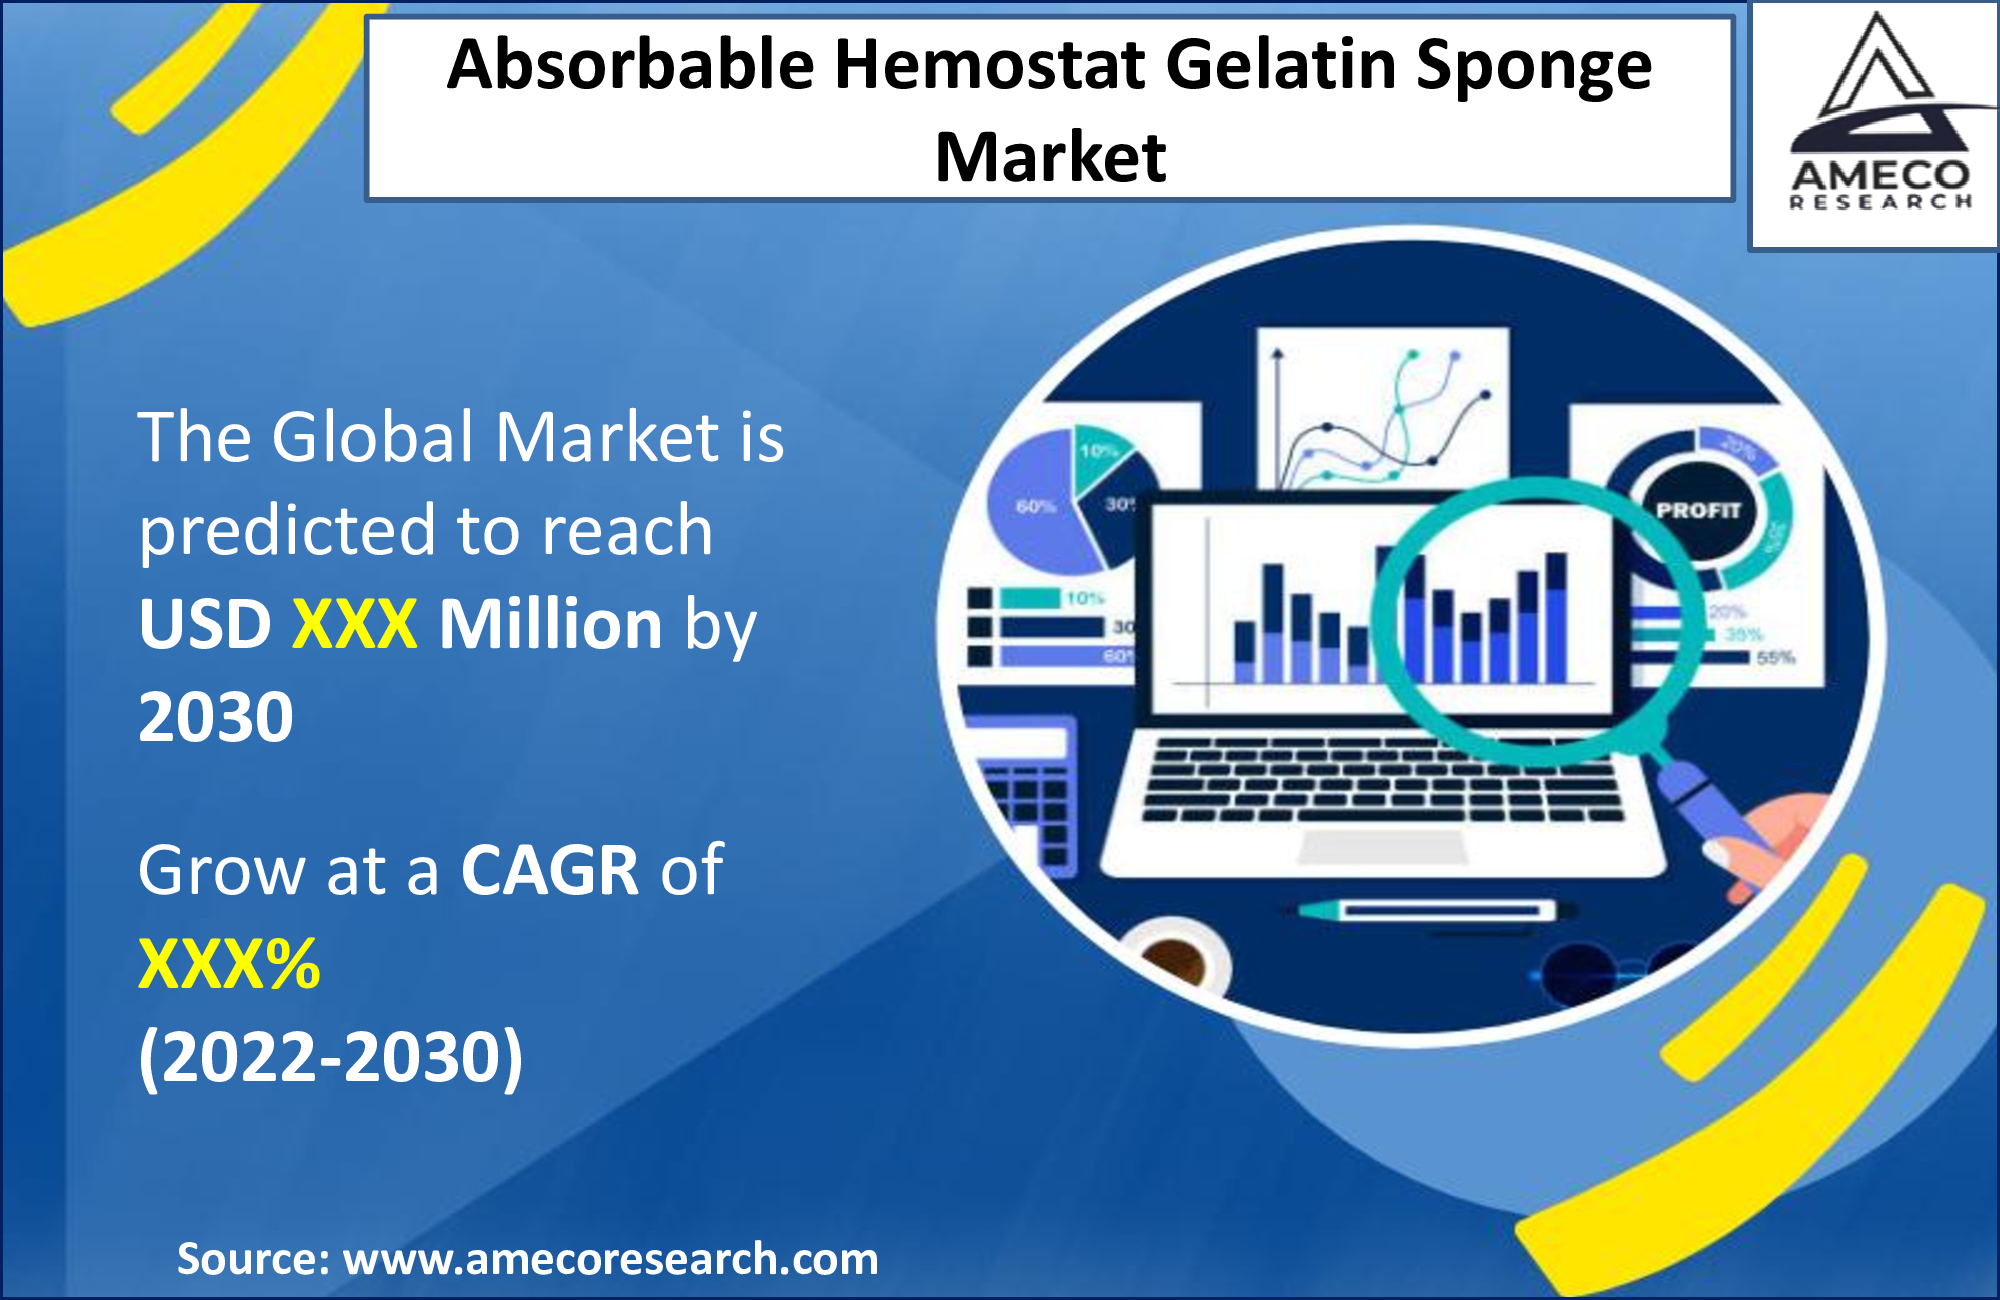 Absorbable Hemostat Gelatin Sponge Market